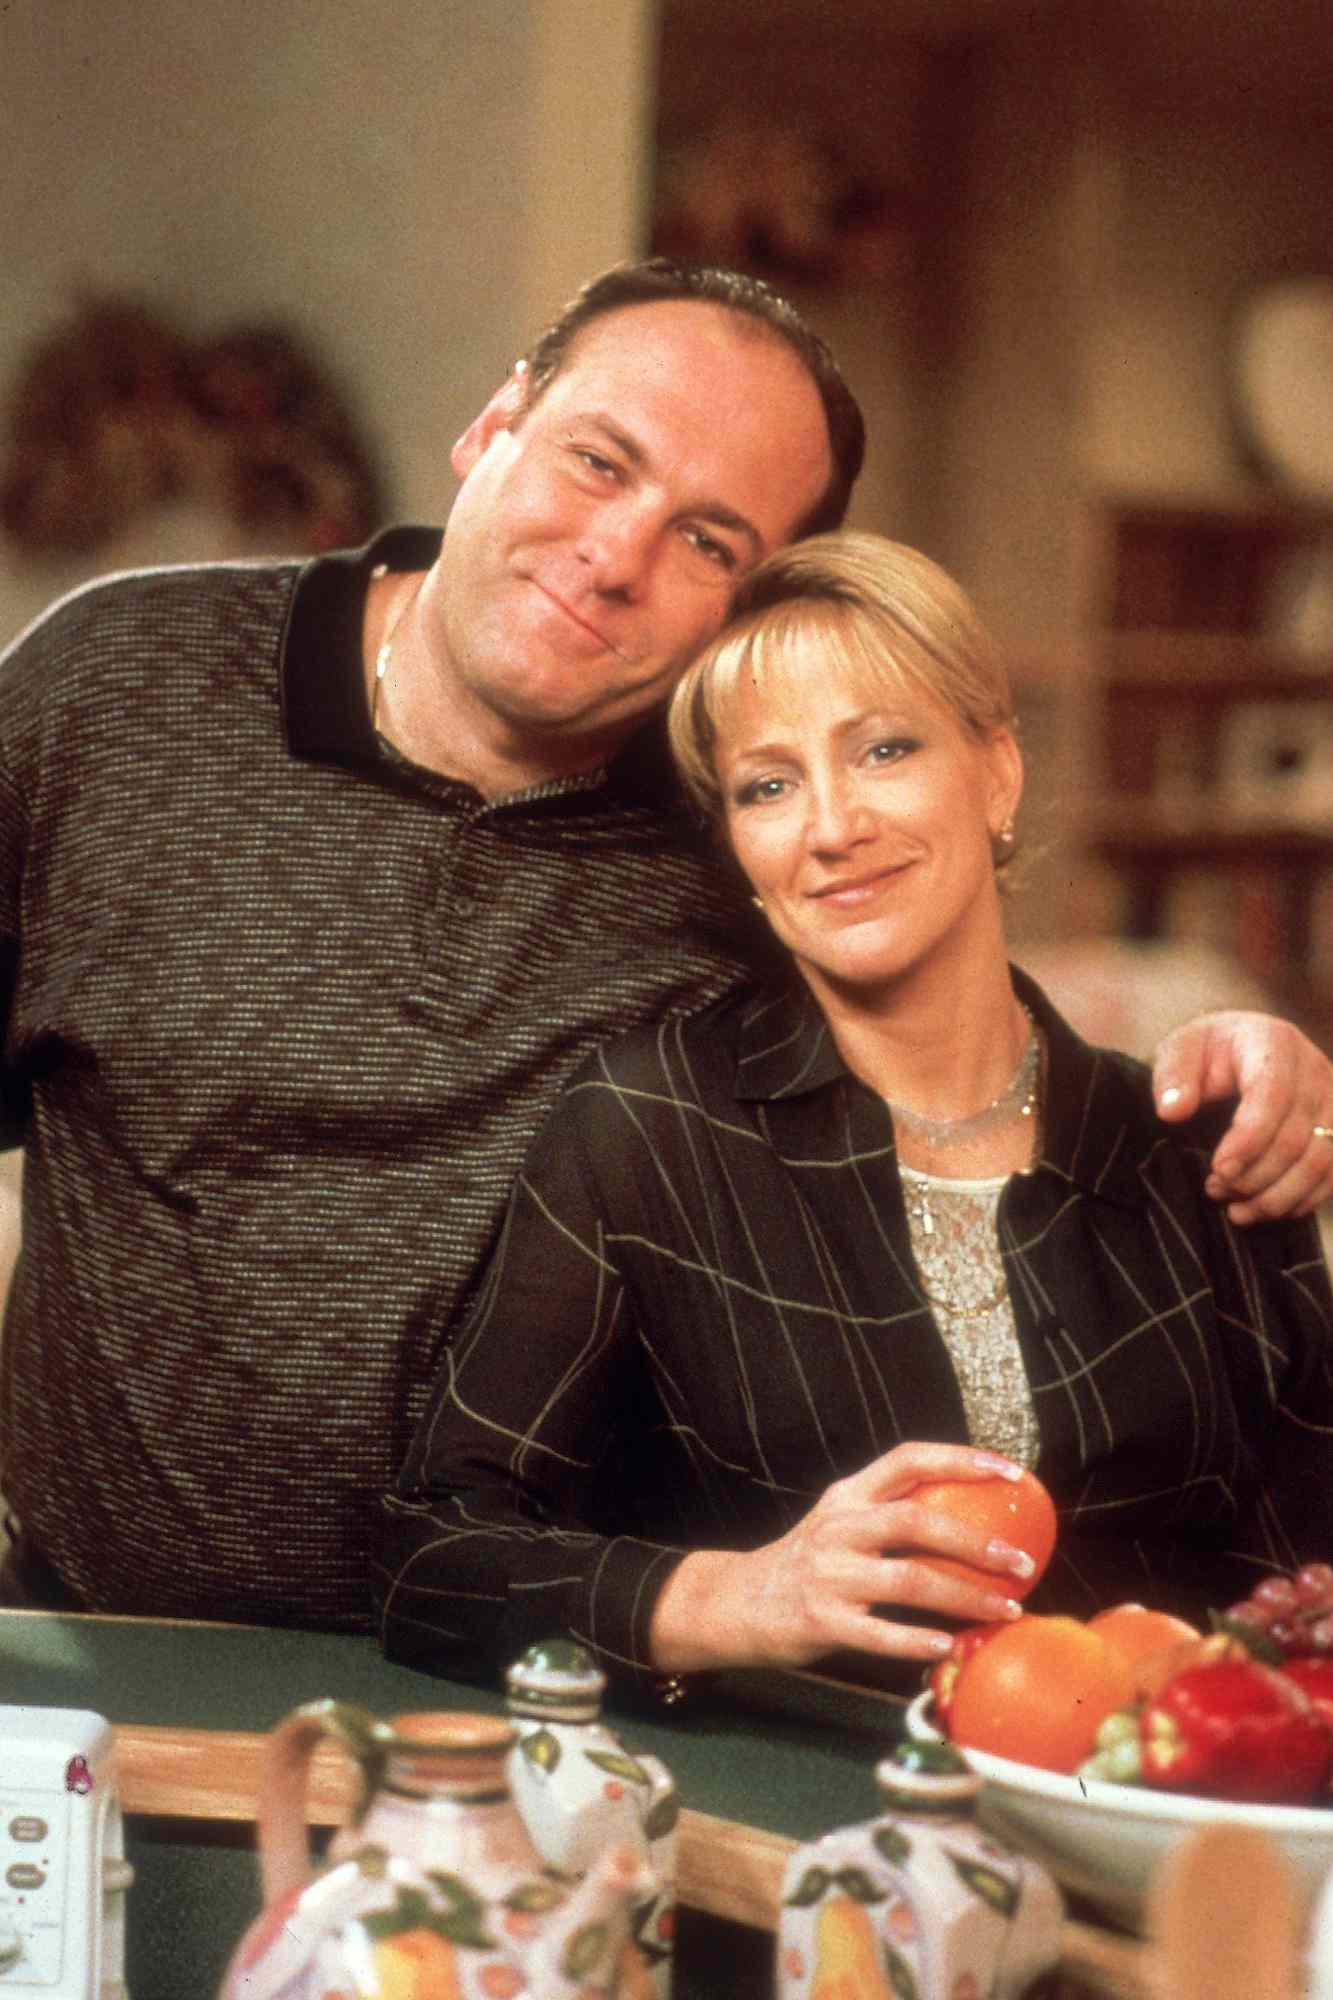 Actors James Gandolfini and Edie Falco in a scene from TV series 'The Sopranos', circa 2000. 